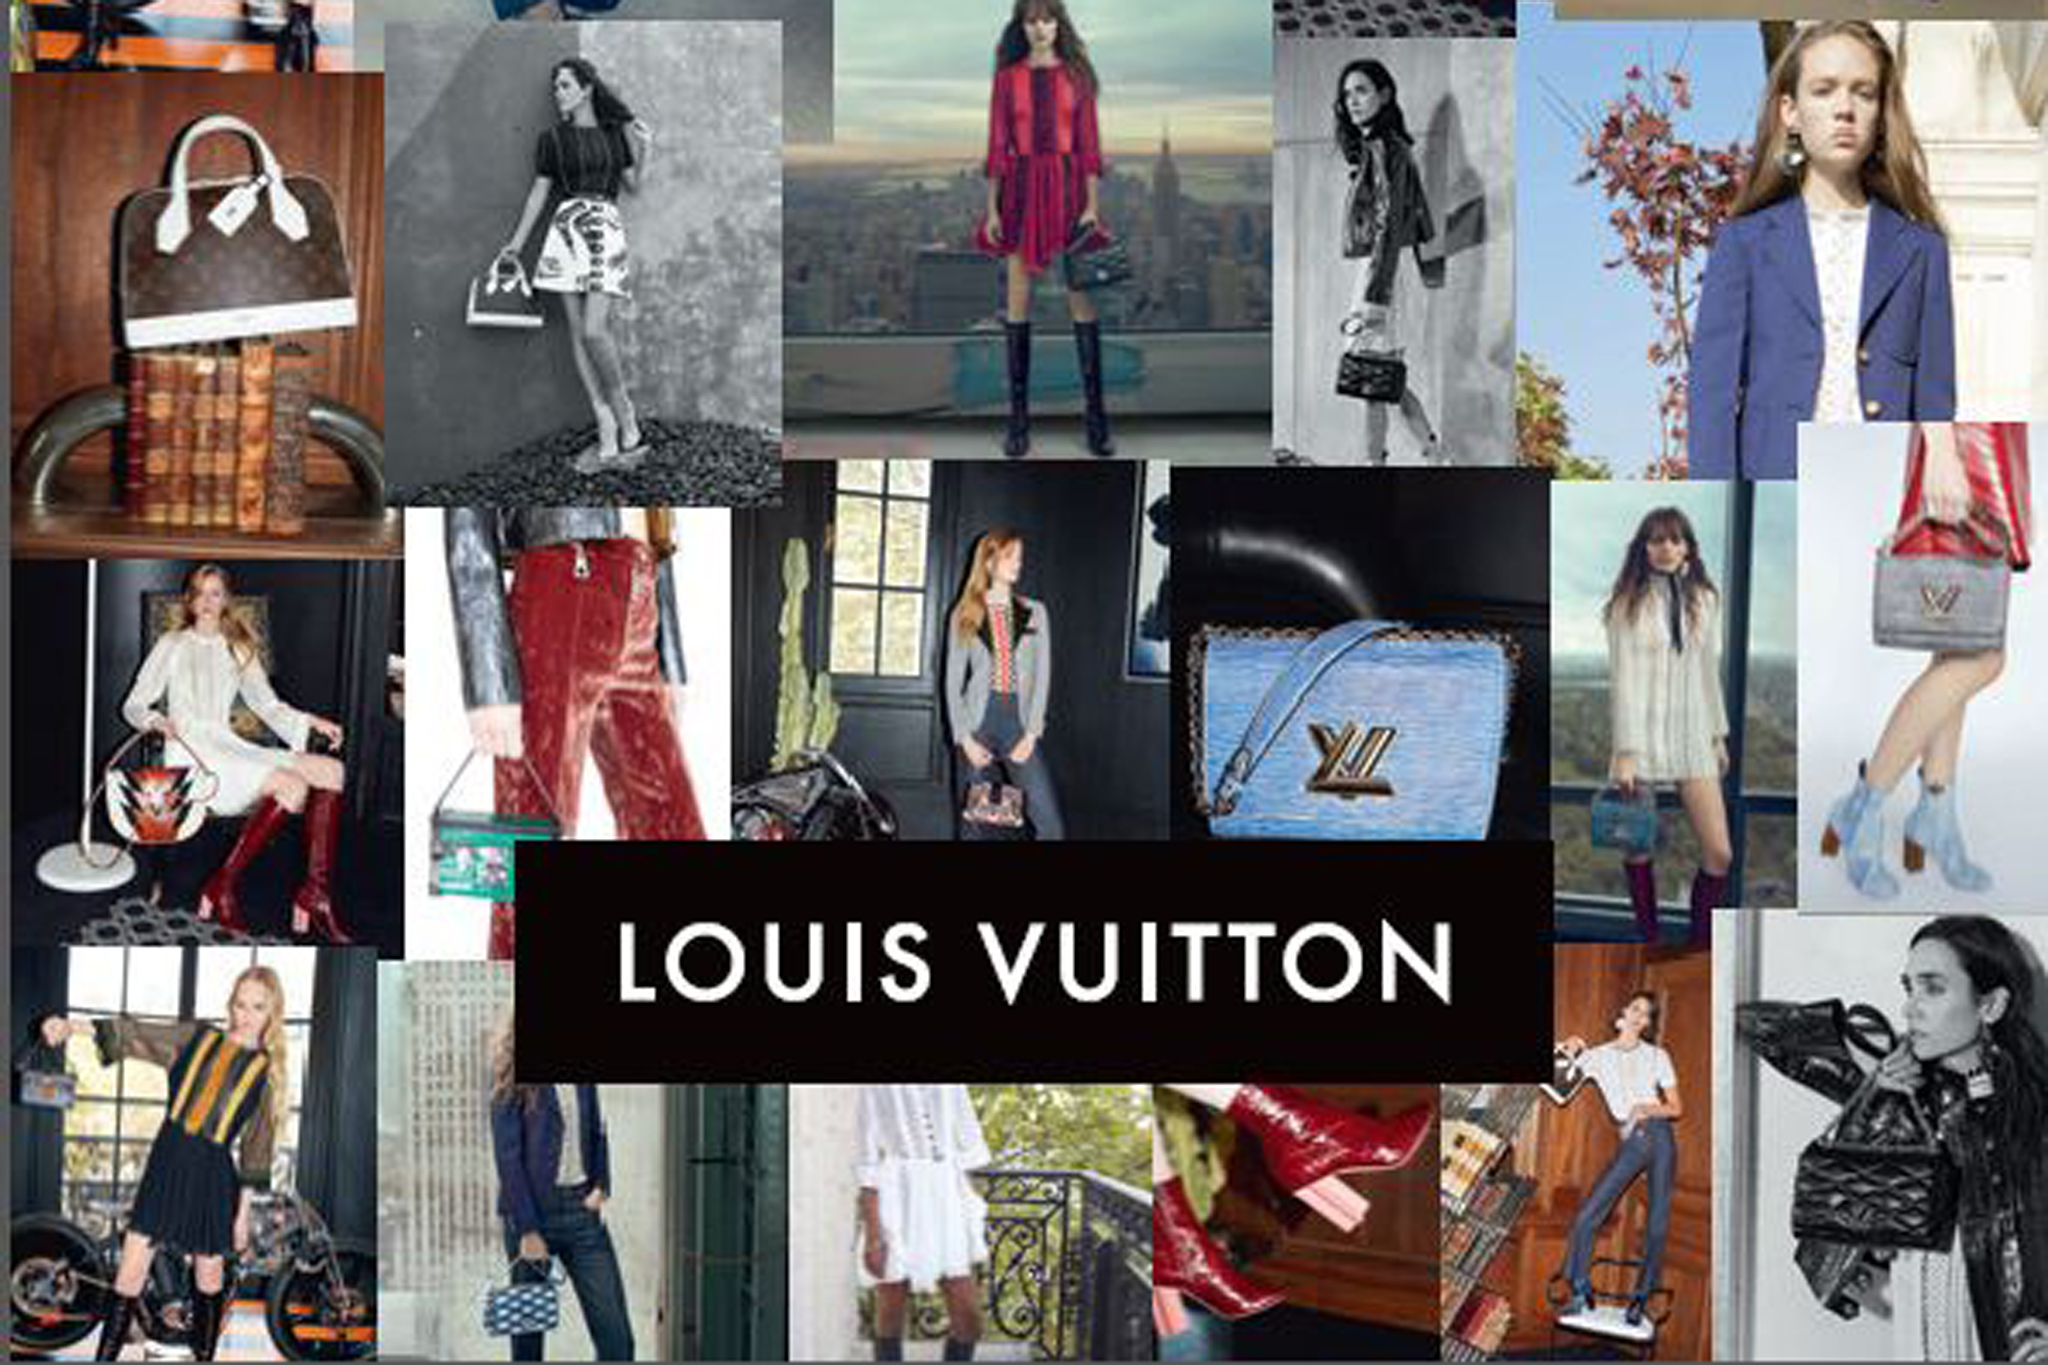 Louis vuitton: Fashion Studies